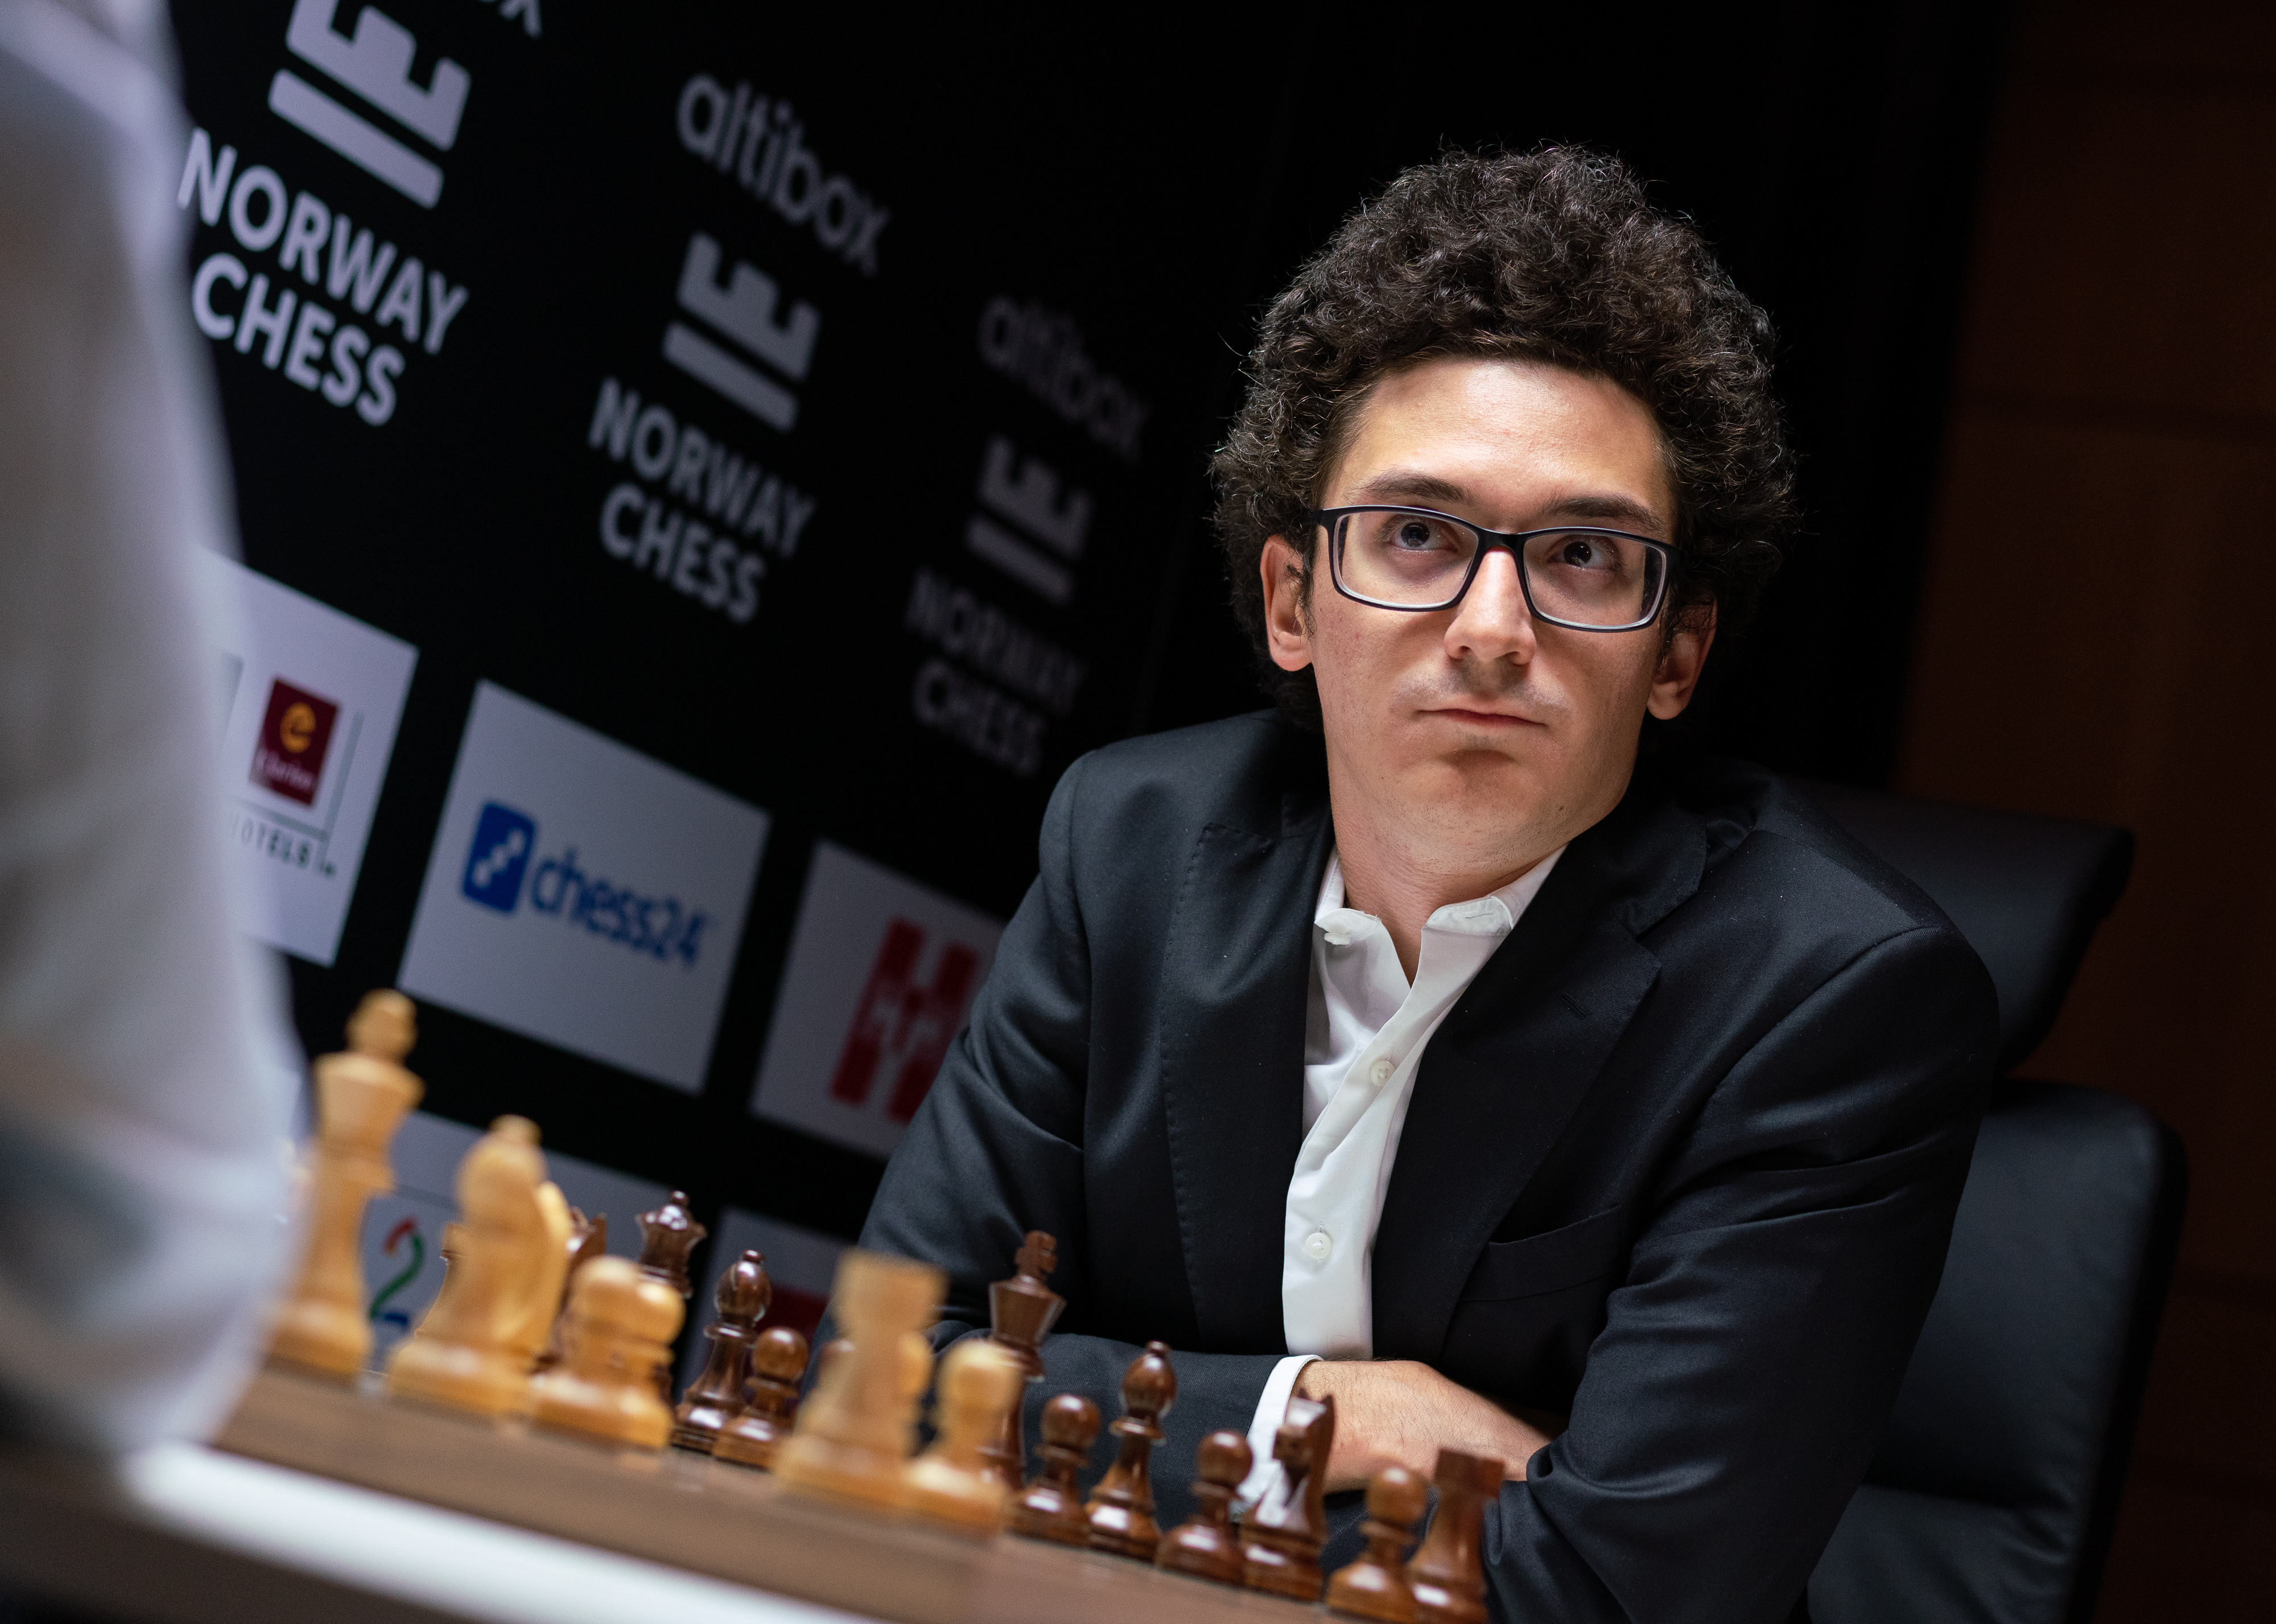 Mohammadreza Firouzja player profile - ChessBase Players